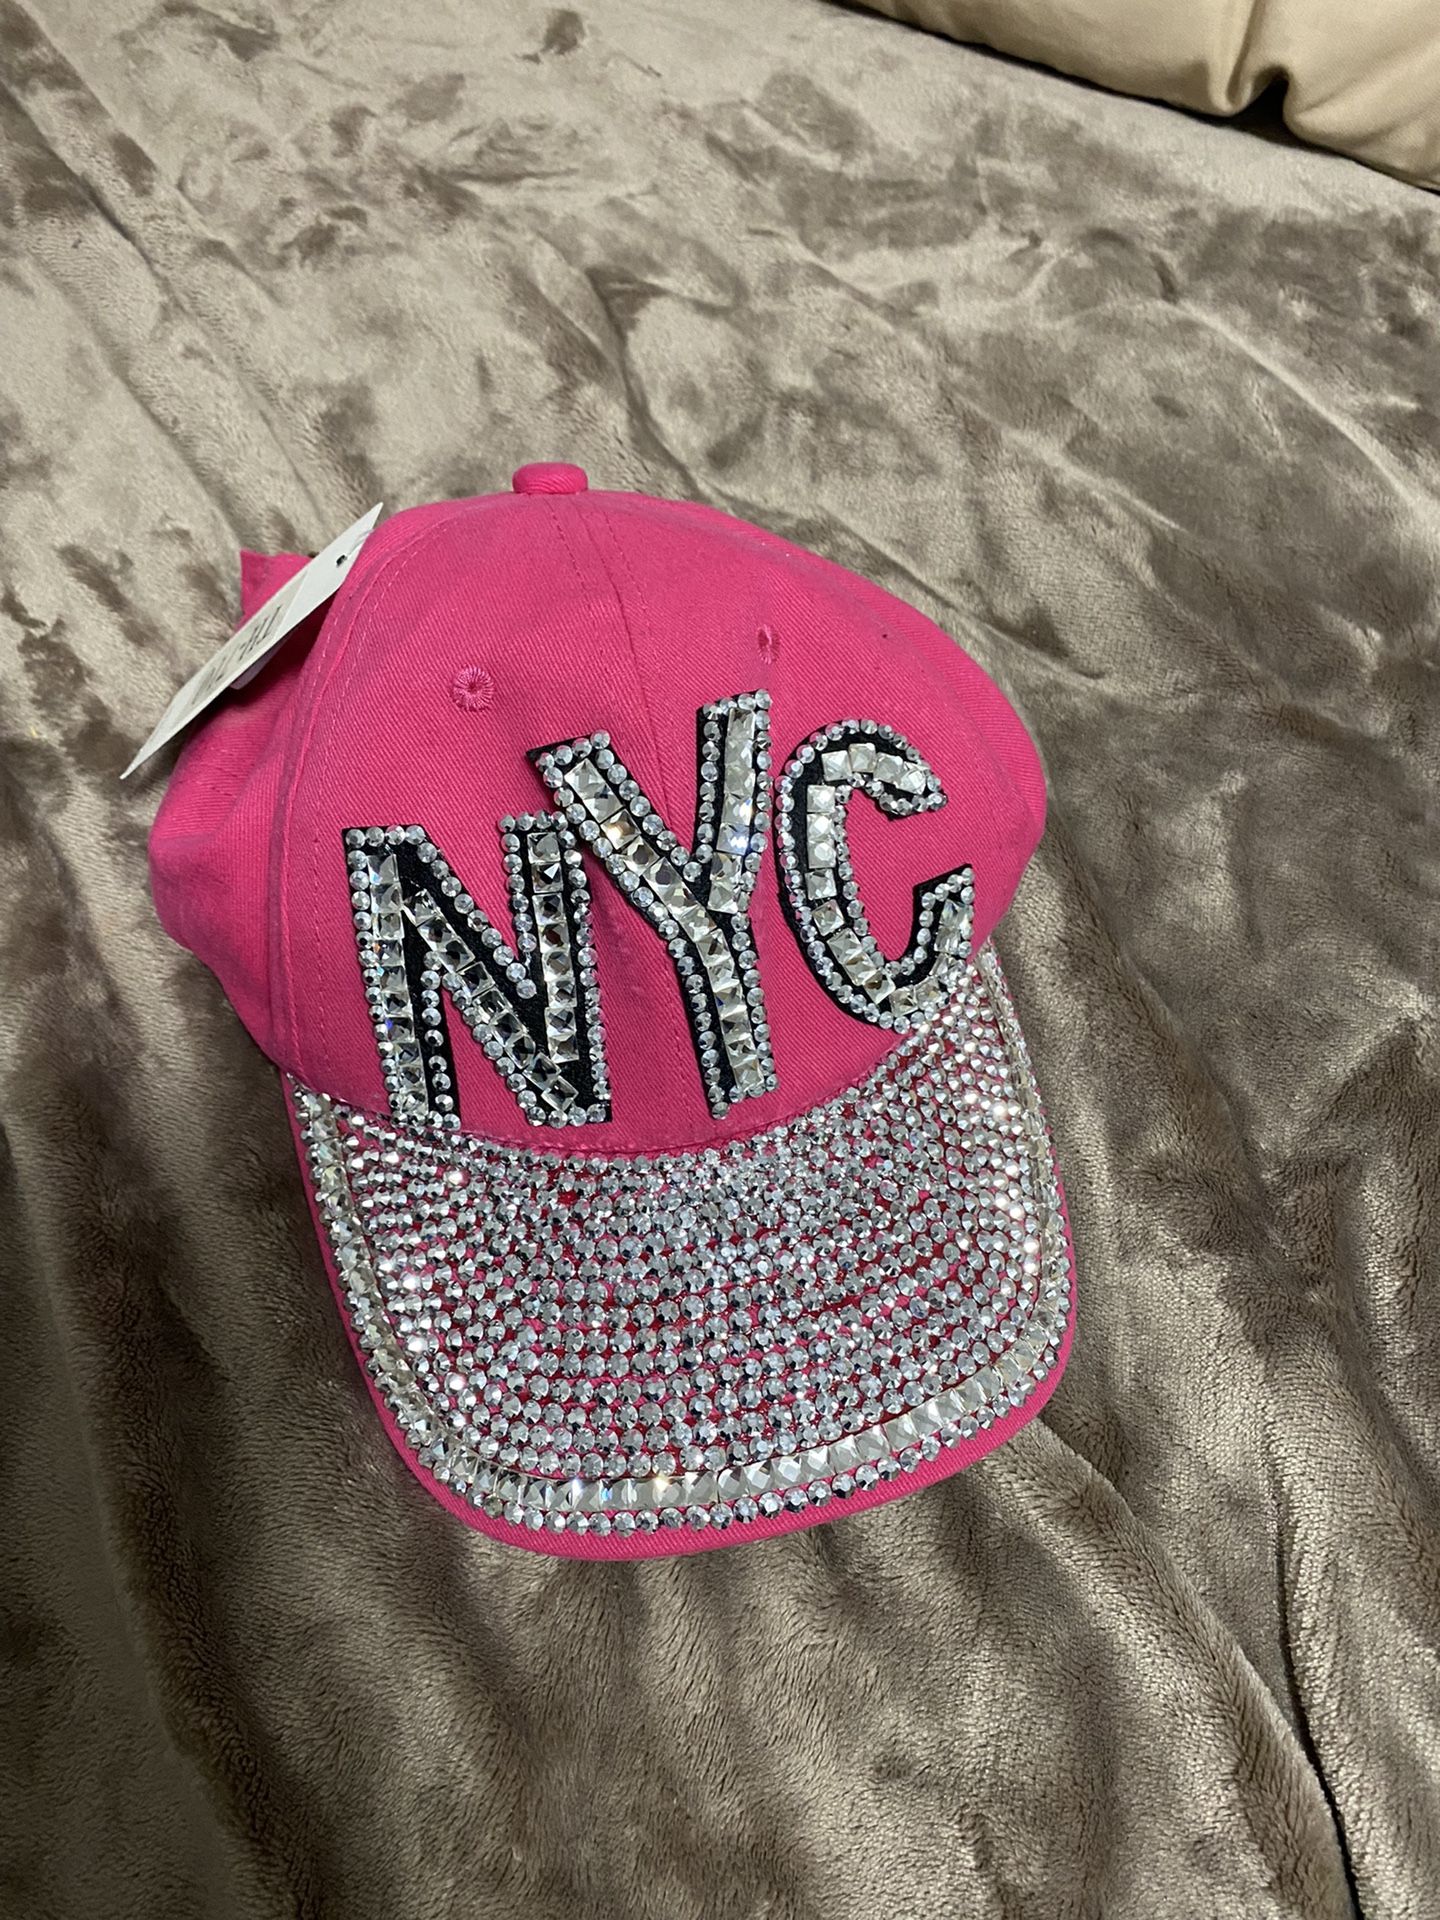 NYC hat